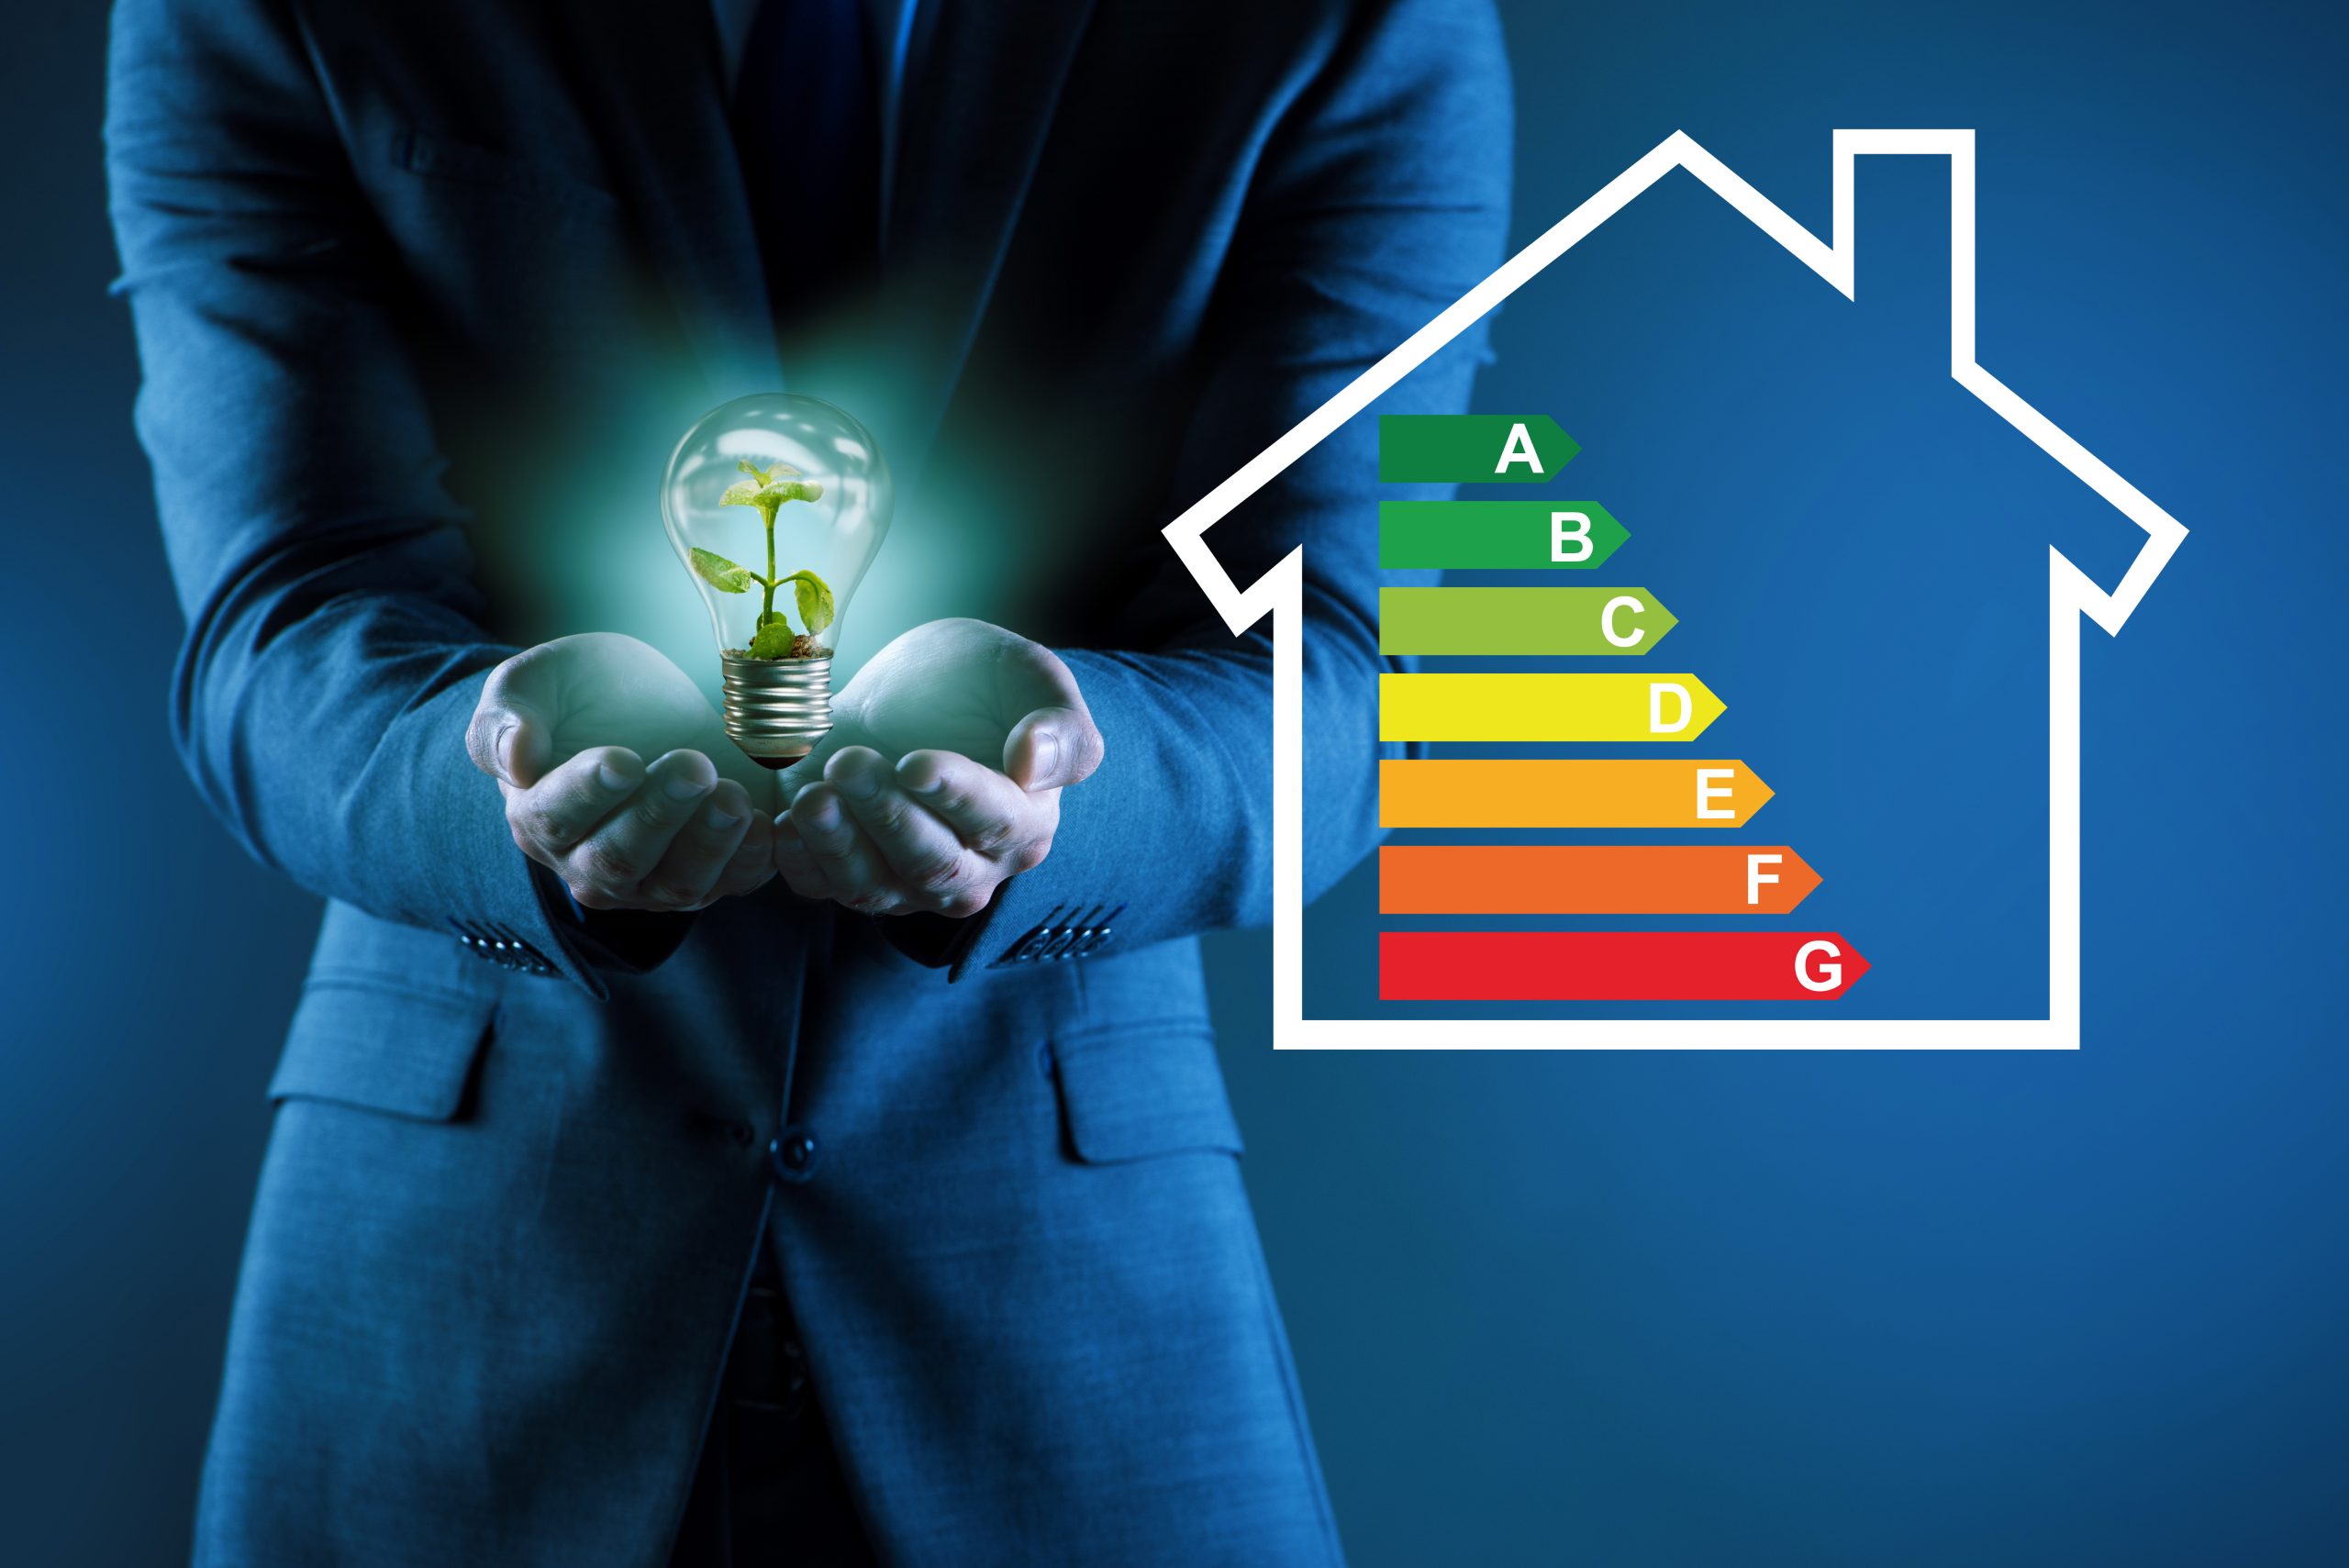 What is the energy efficiency of residential buildings?